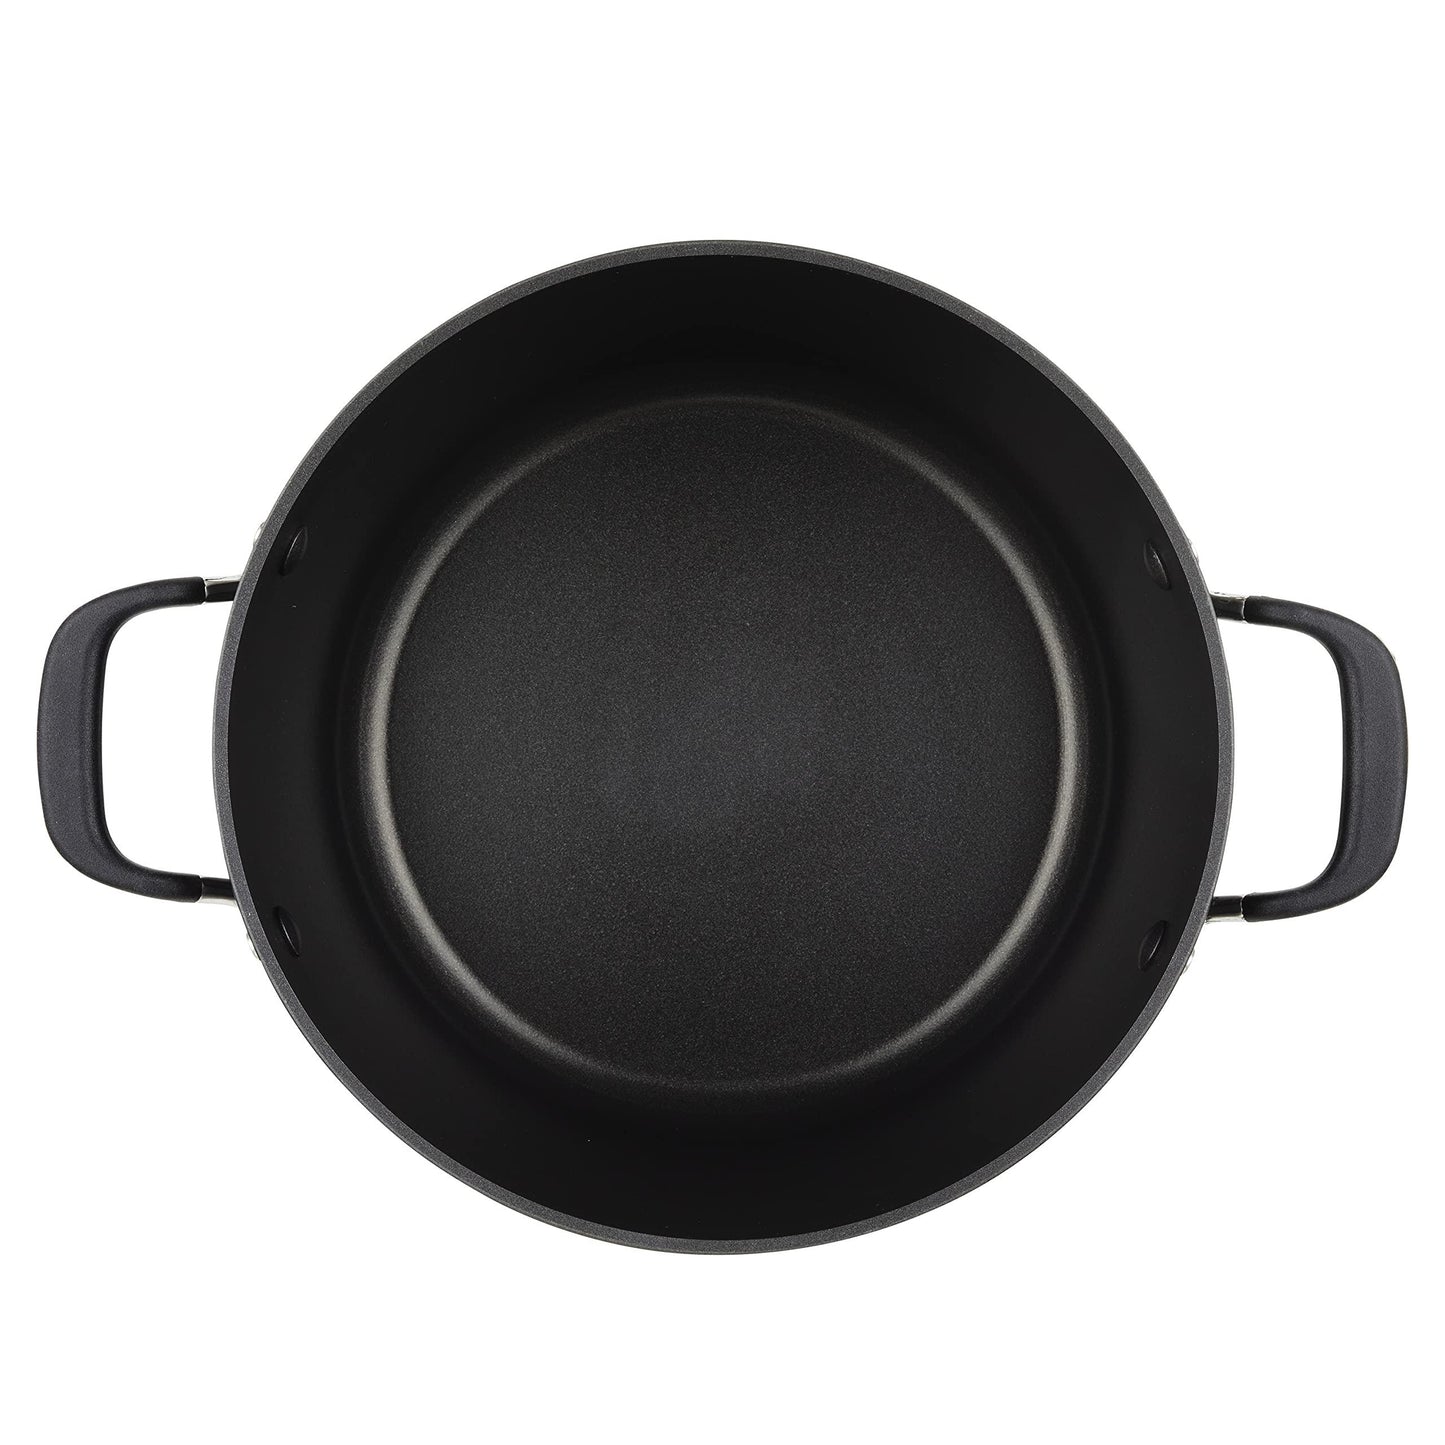 KitchenAid Hard Anodized Nonstick Stockpot with Lid, 8 Quart, Onyx Black - CookCave